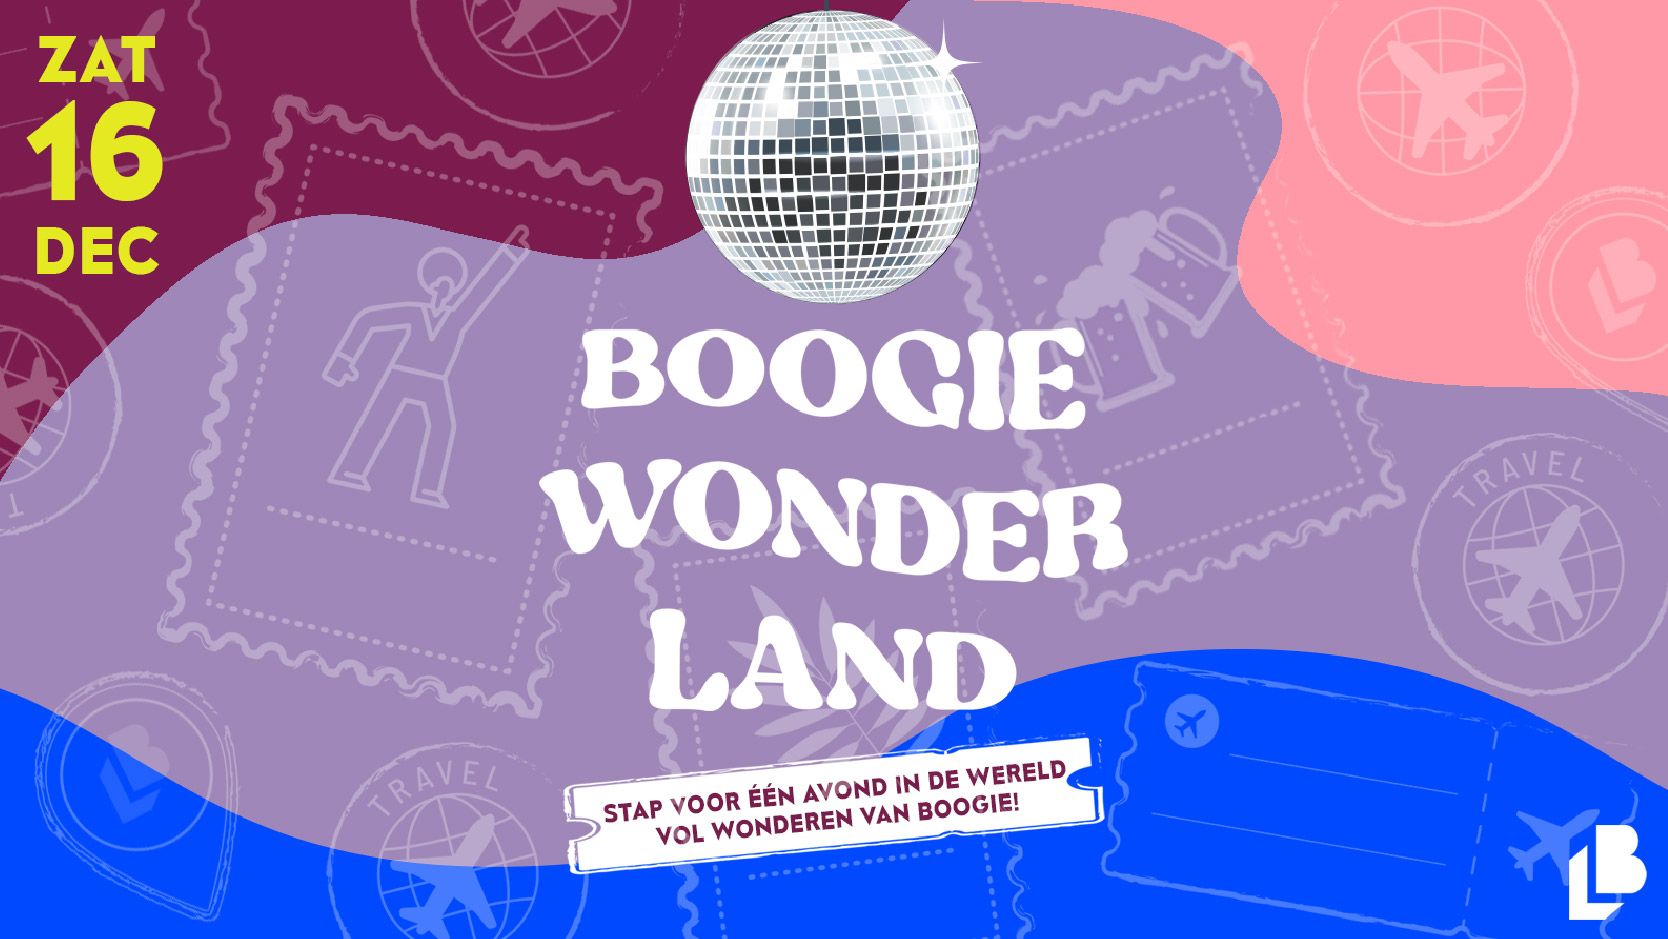 Boogie Wonderland cover